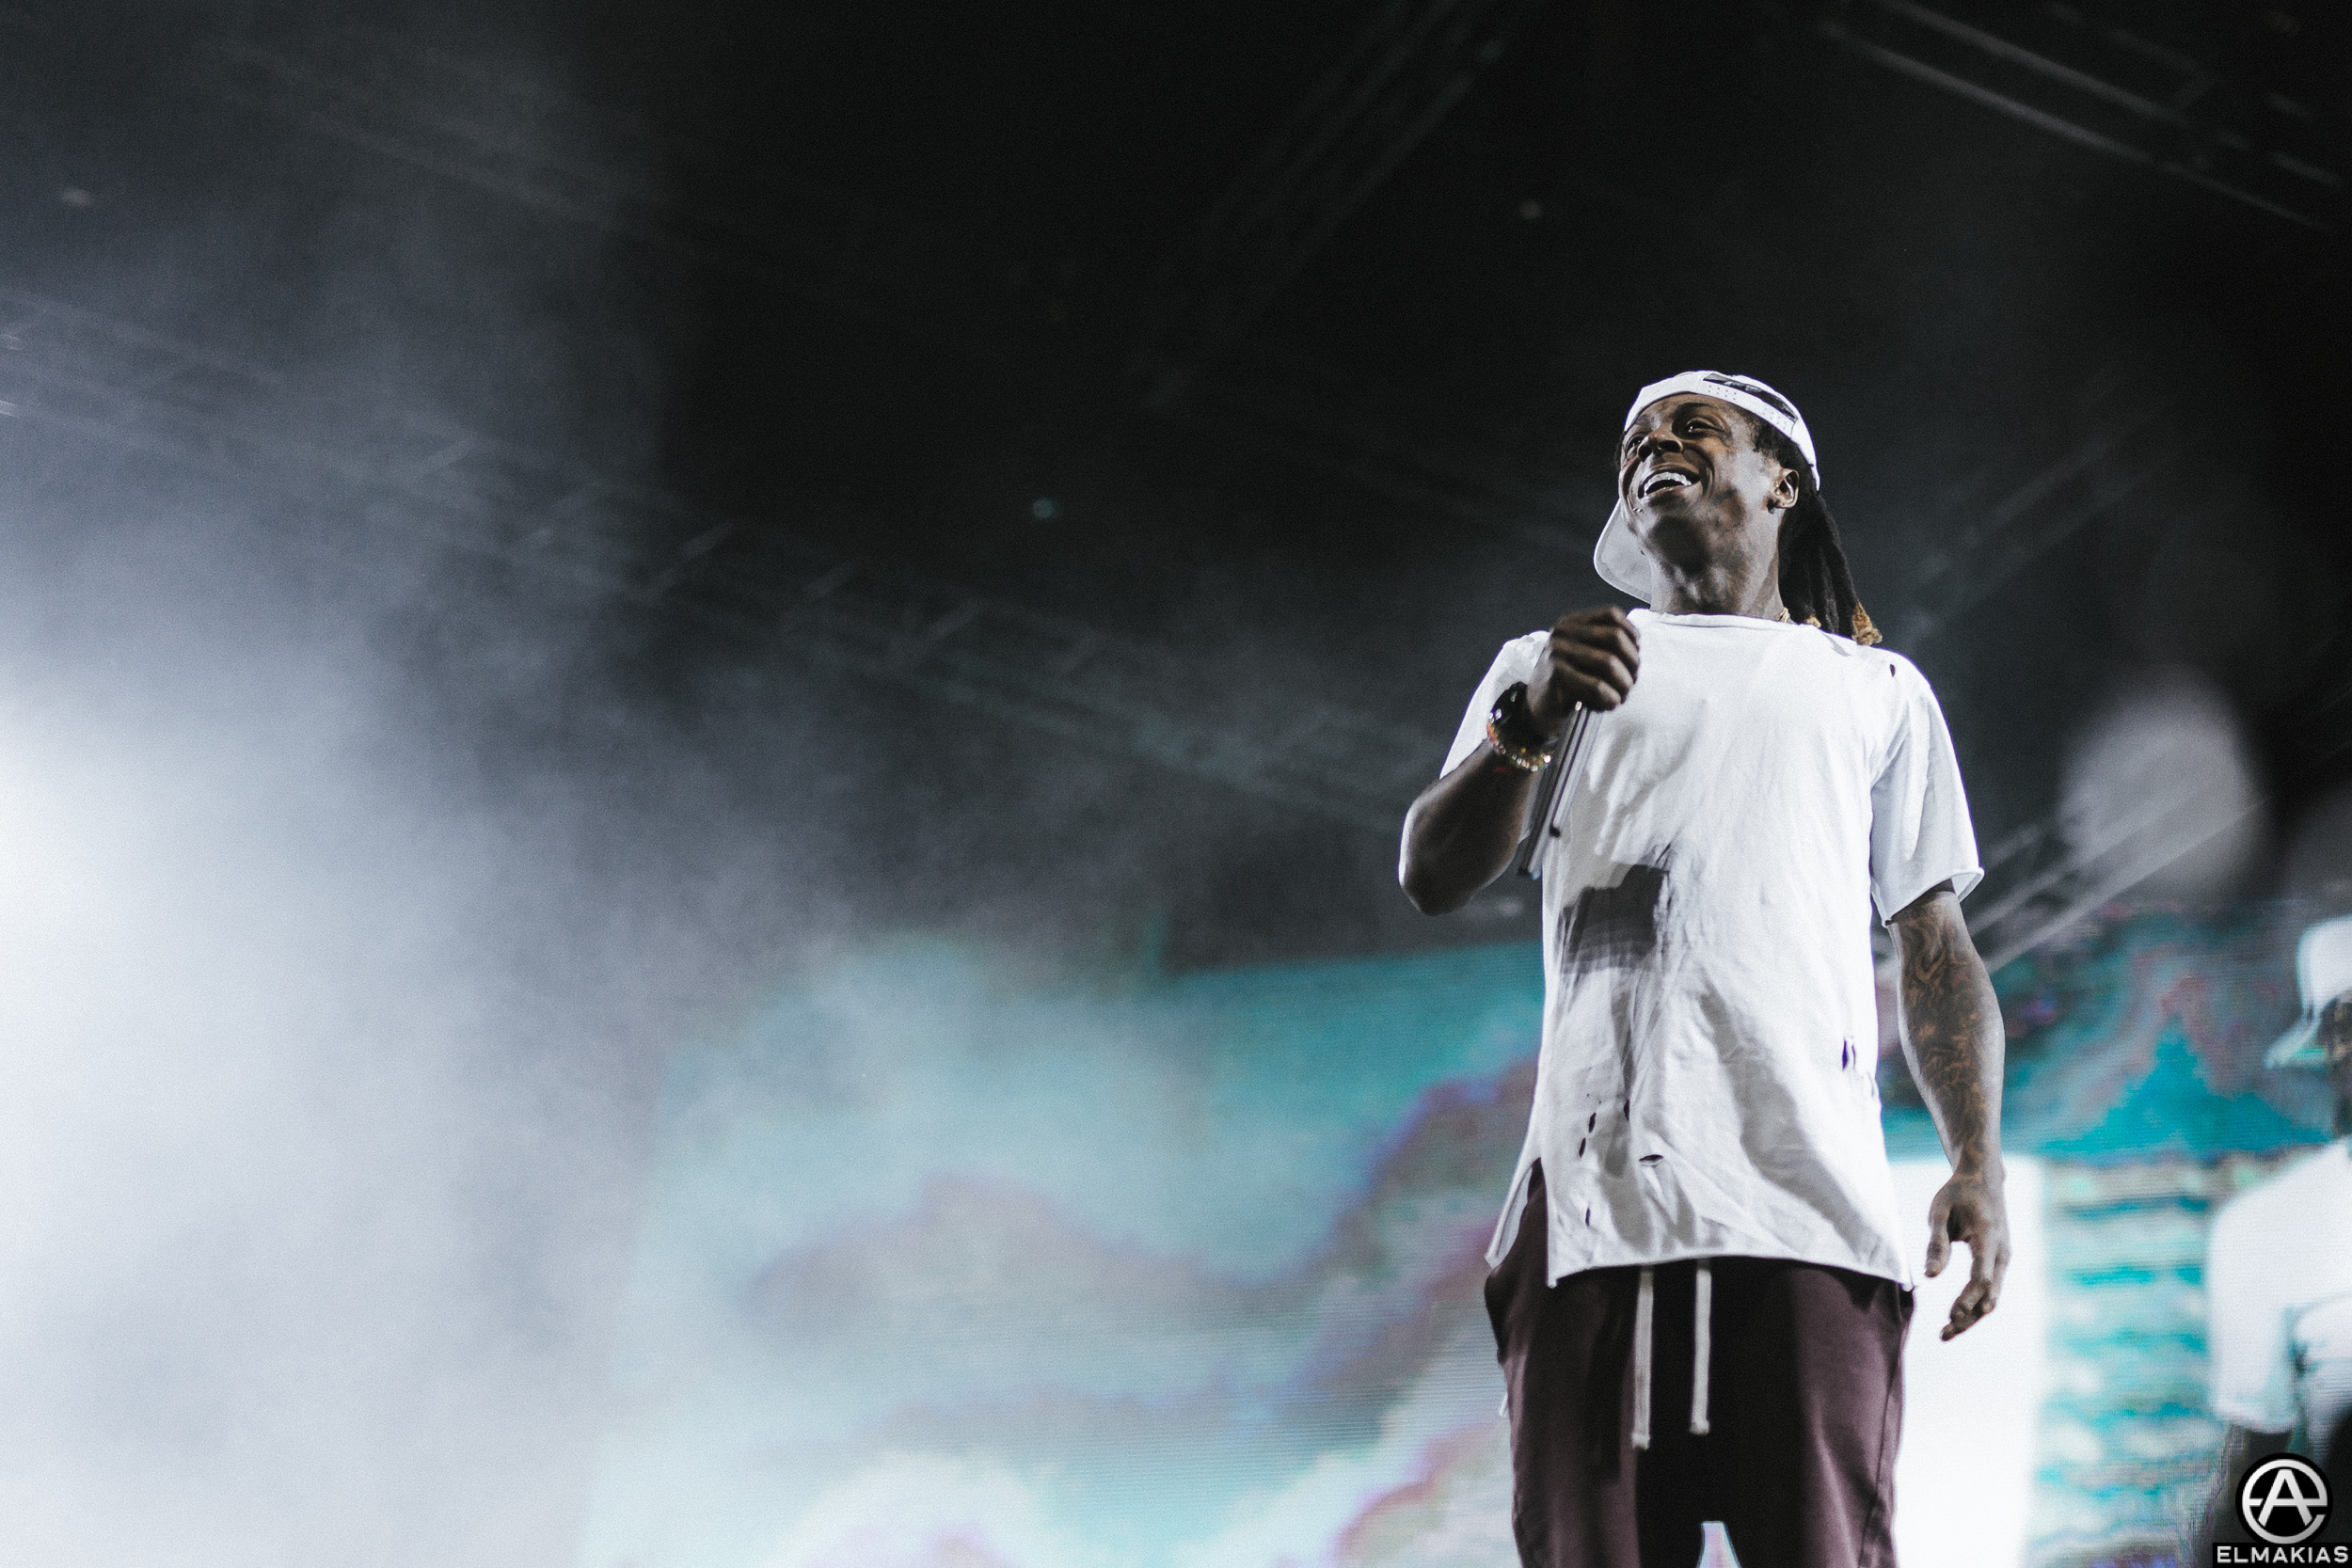 Lil' Wayne at Coachella 2016